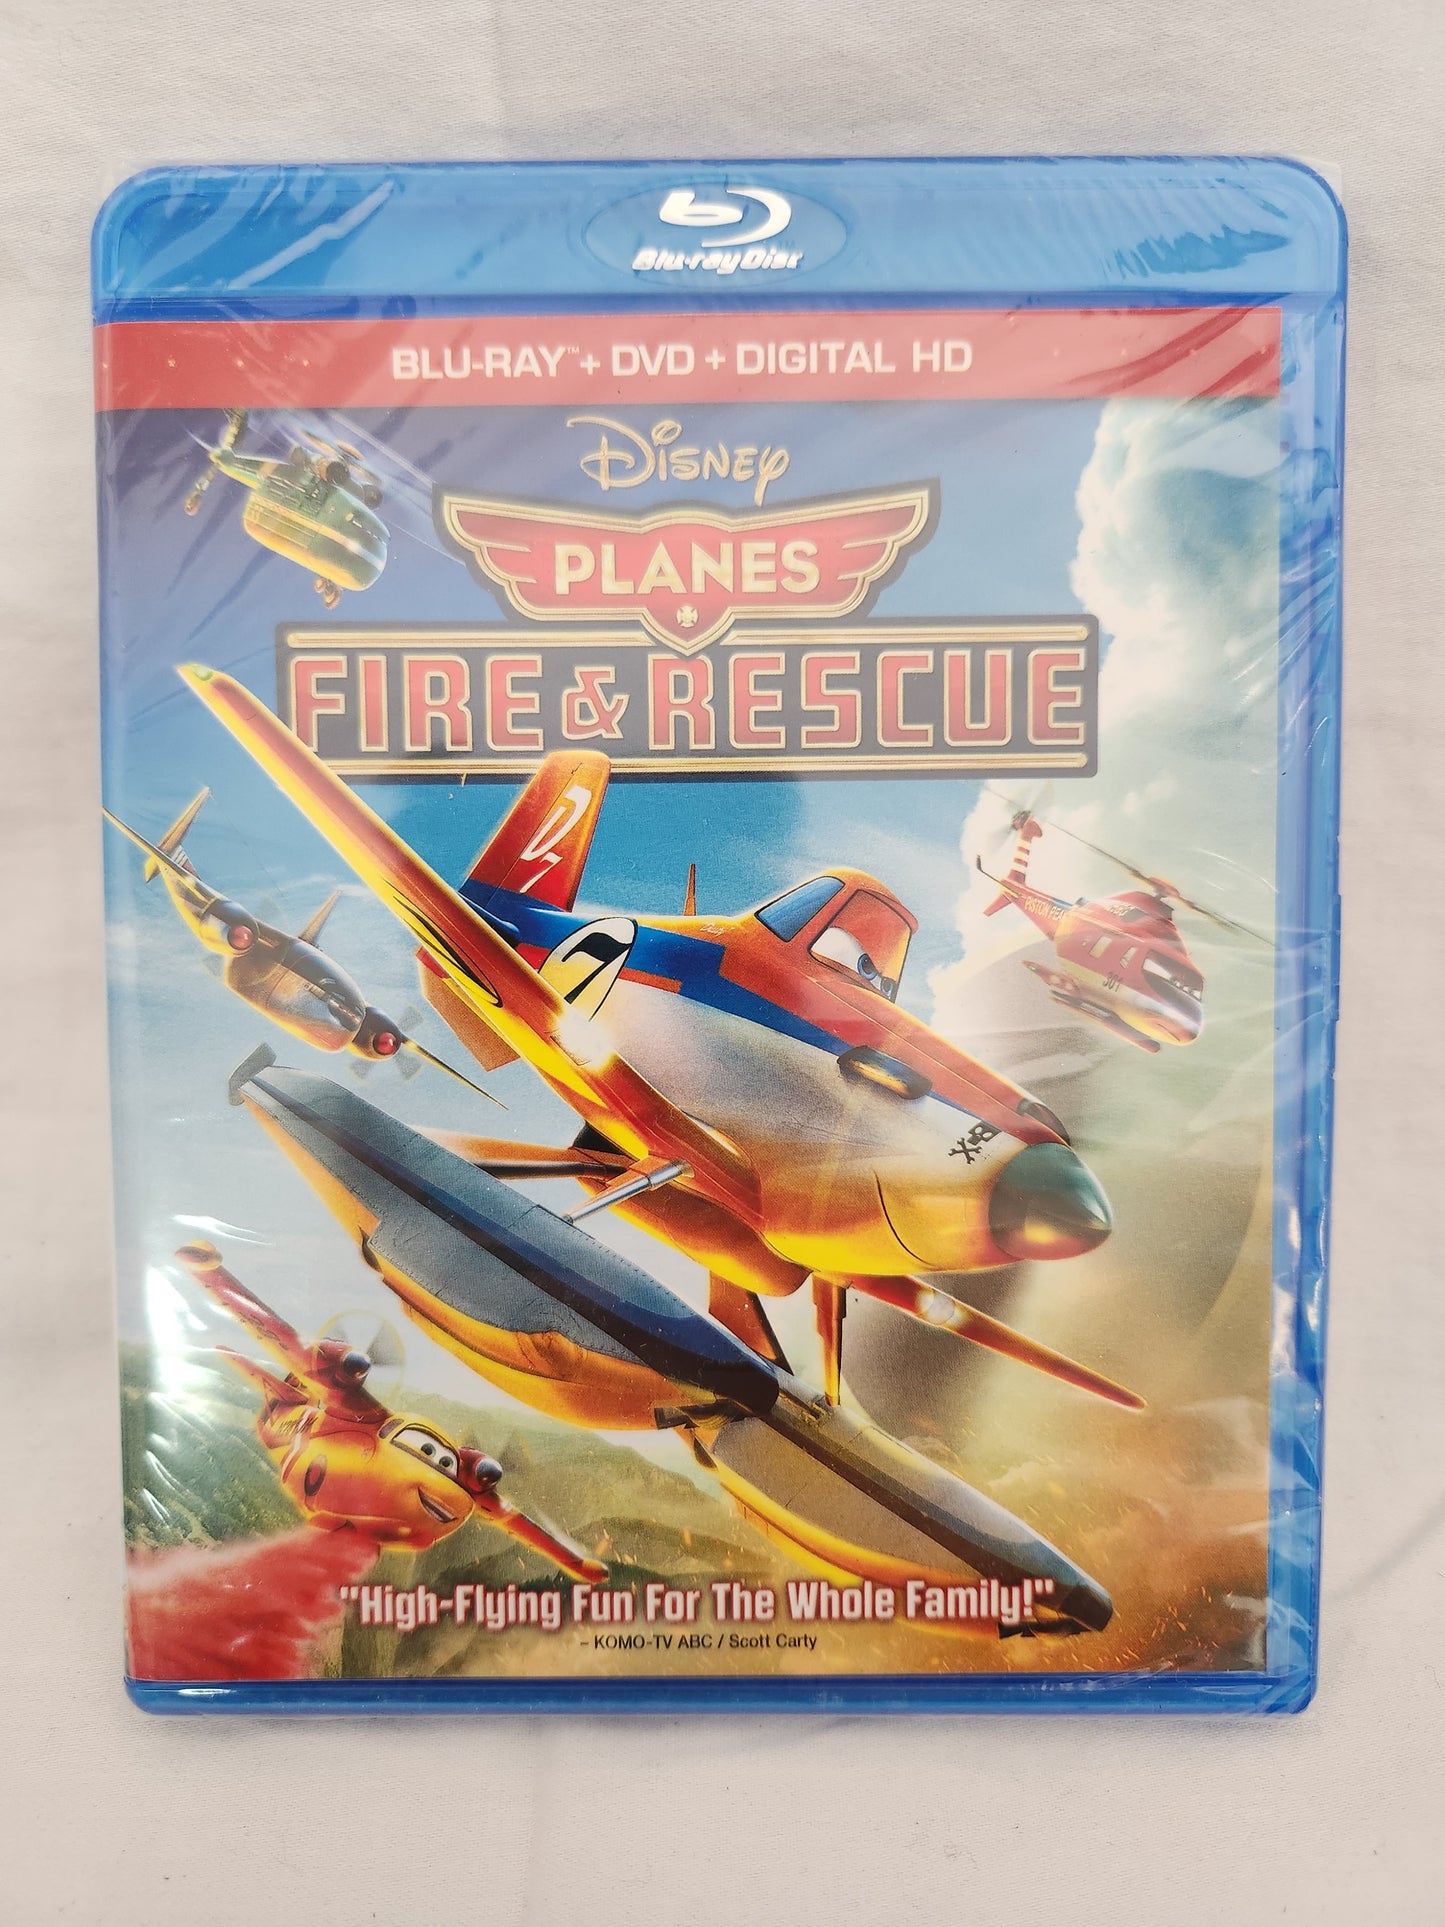 2014 Disney Planes Fire & Rescue Blu-Ray Disc